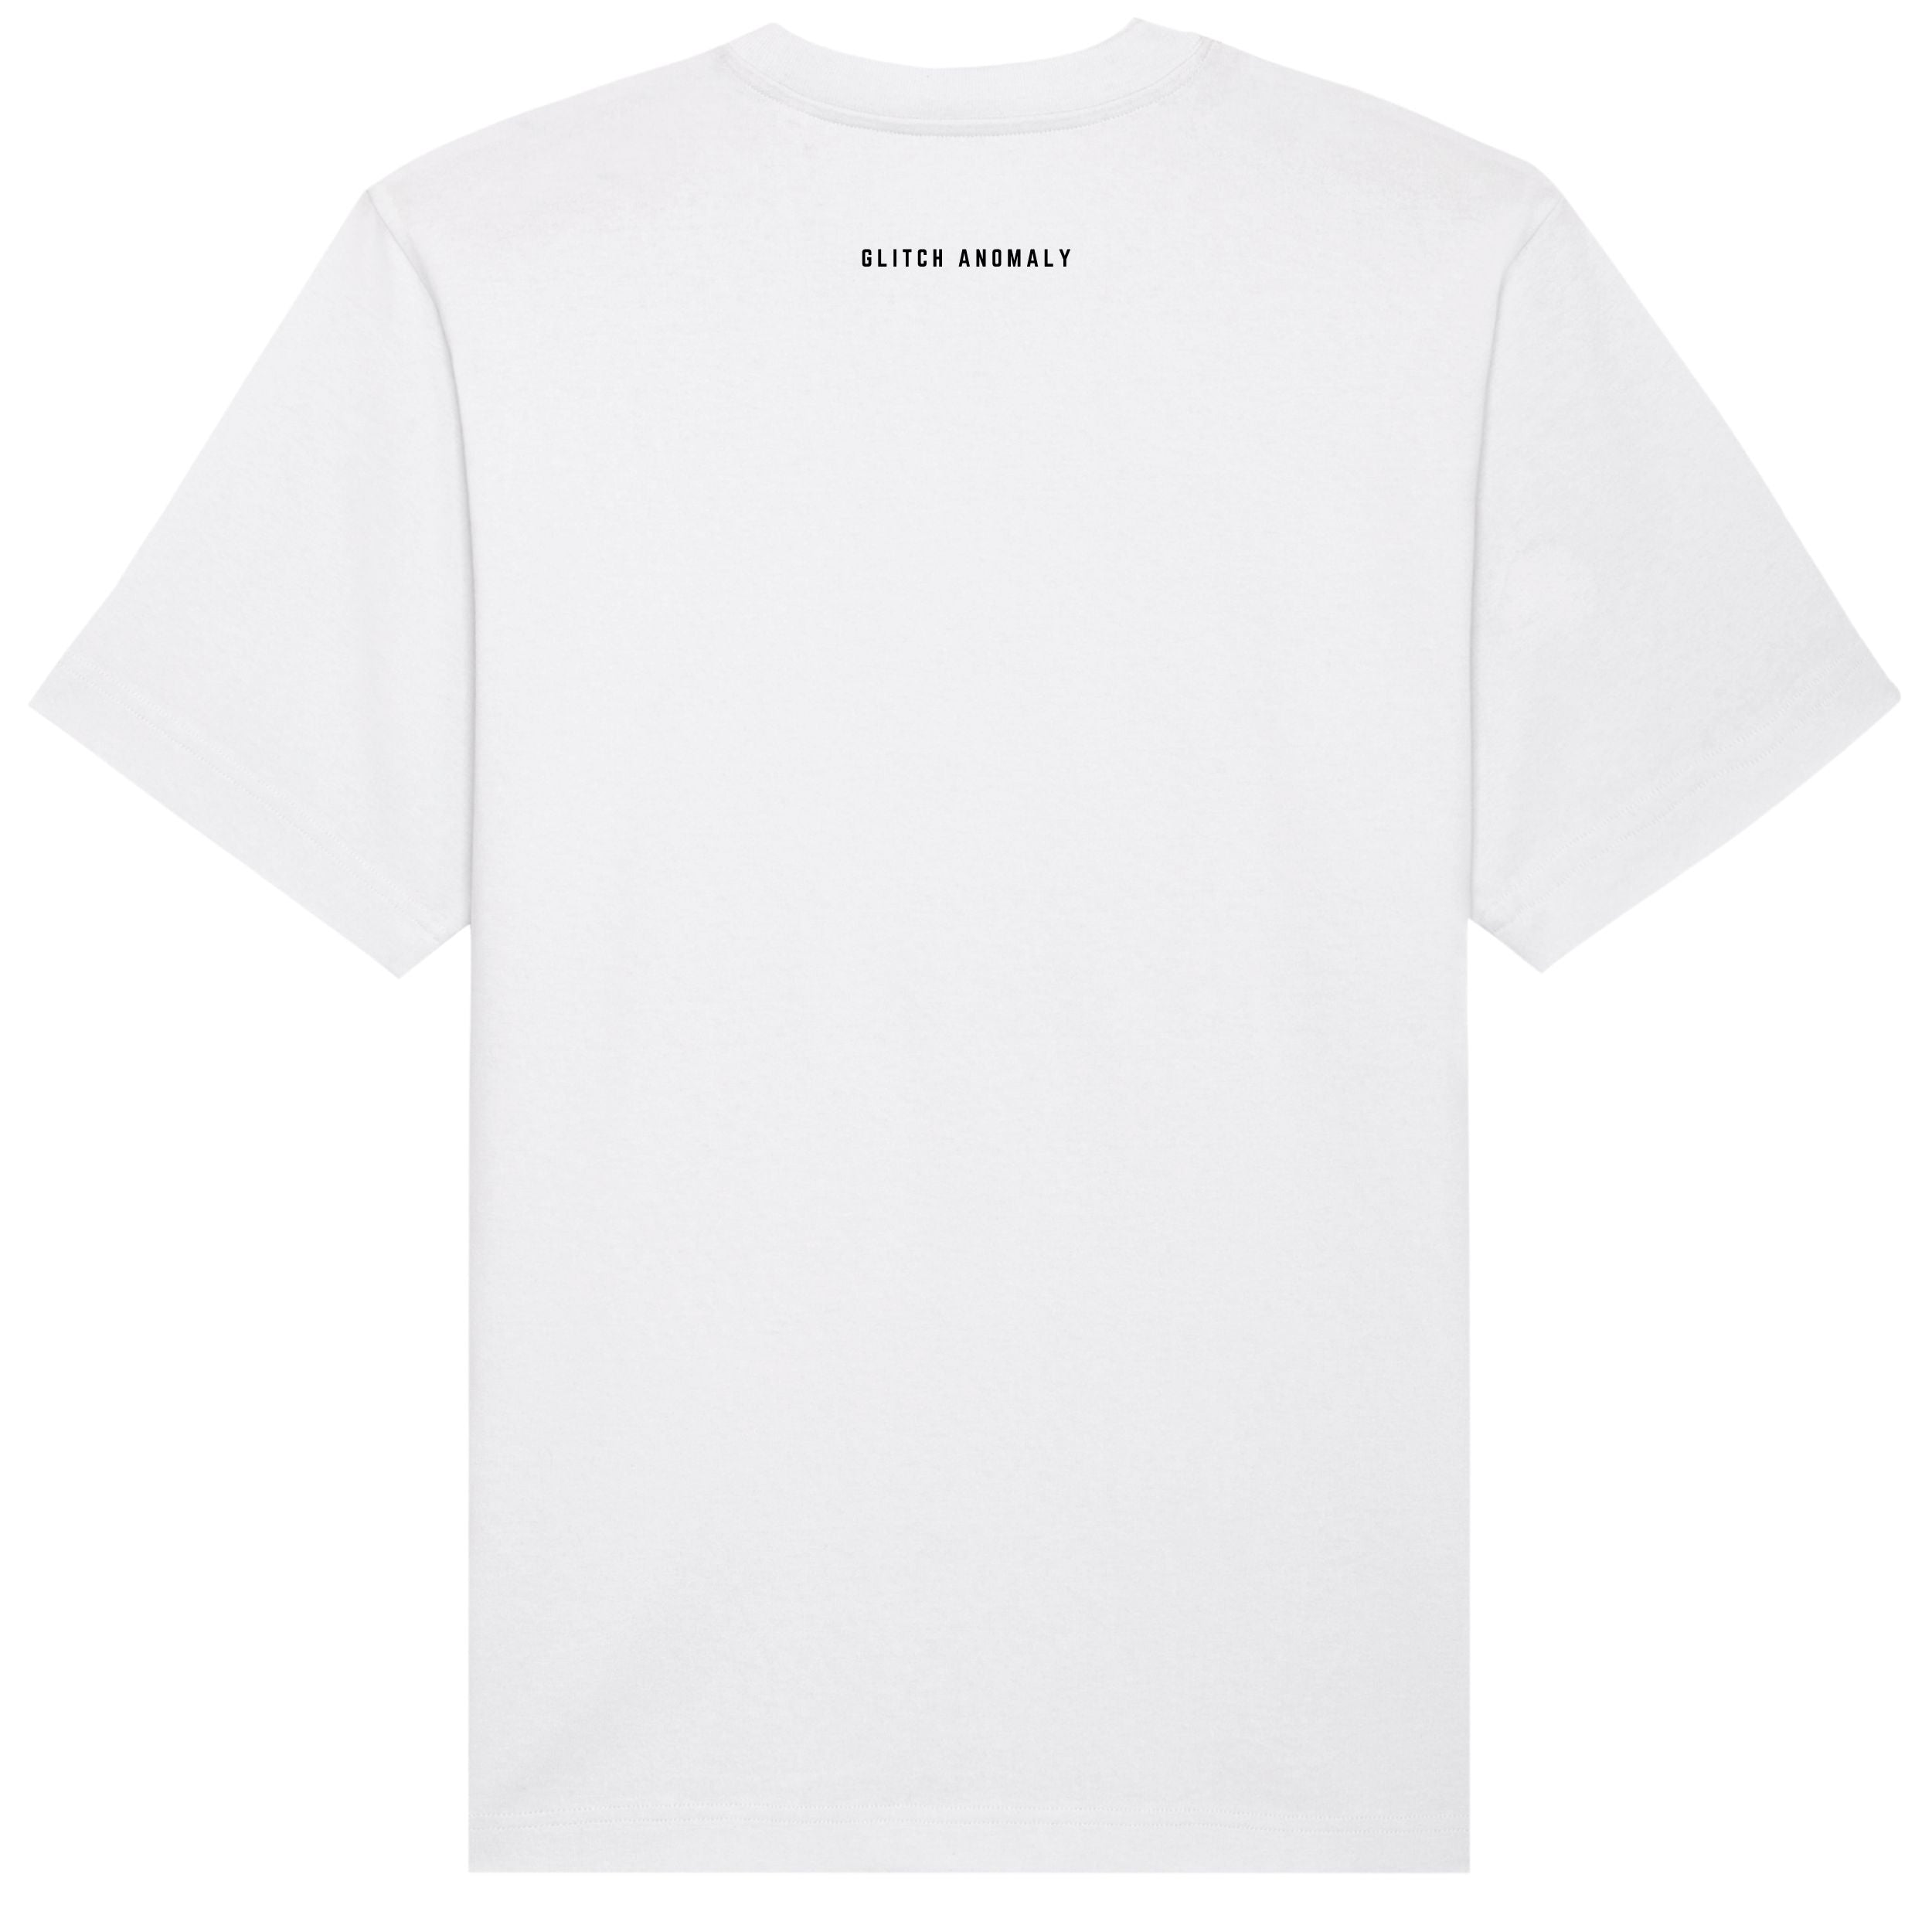 Bio-Degradable T-Shirt – Glitch Anomaly